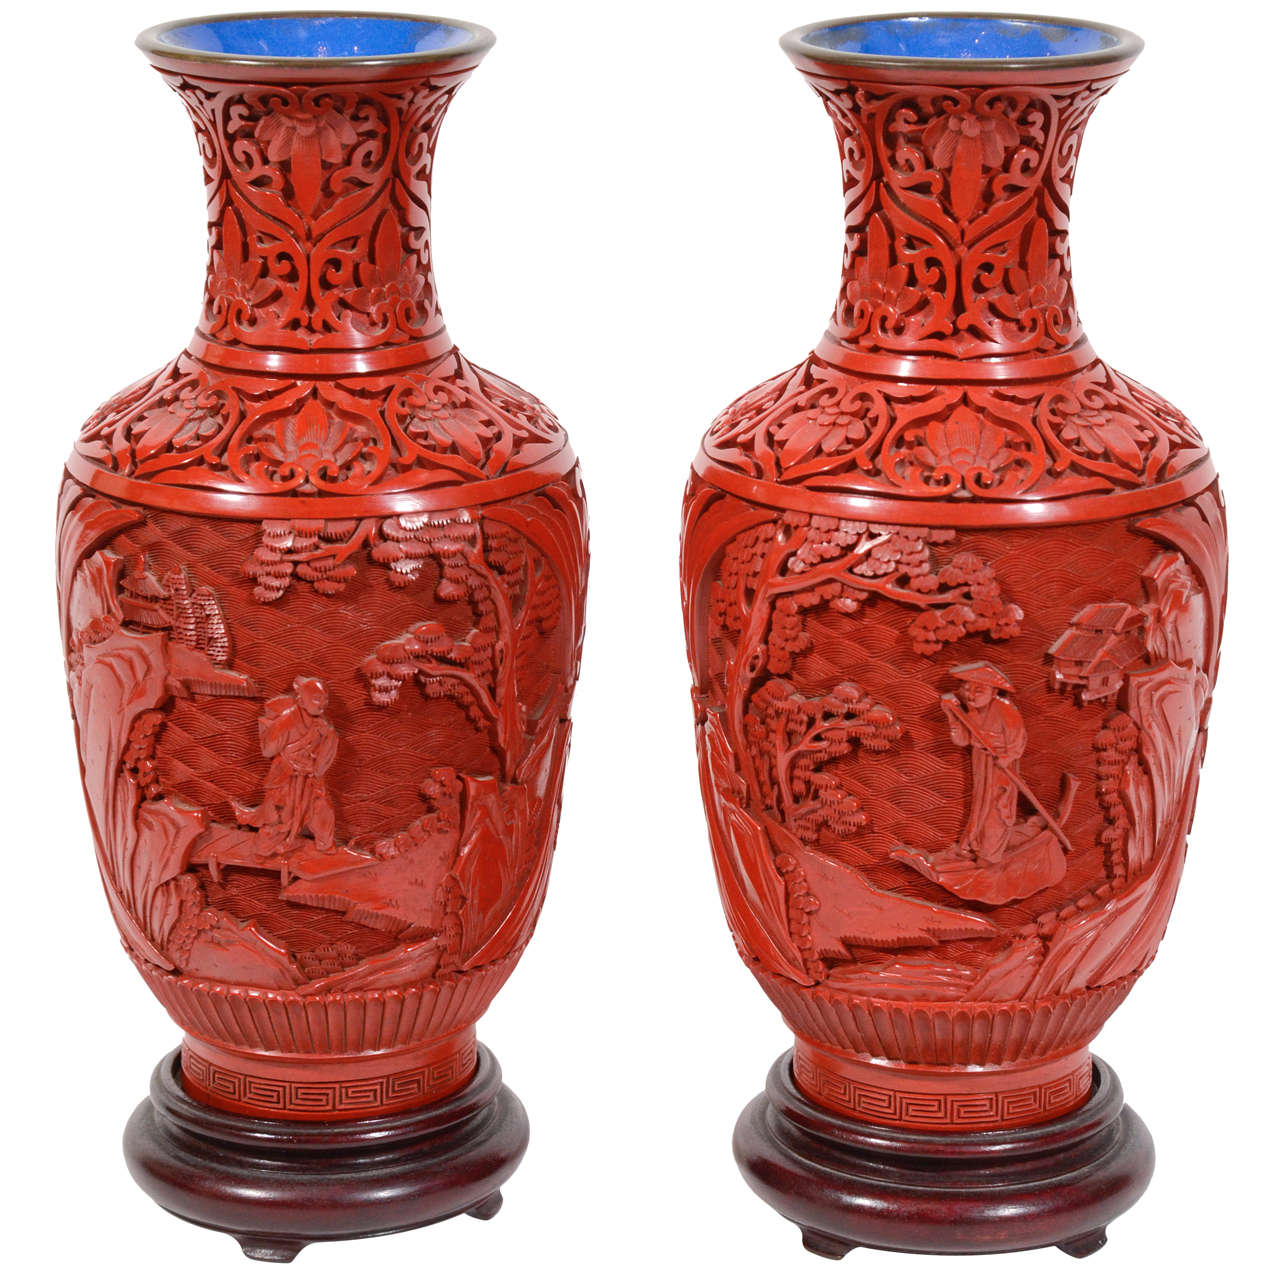 Southern Living at Home Cinnabar Vase 40863 LNIB for sale online 